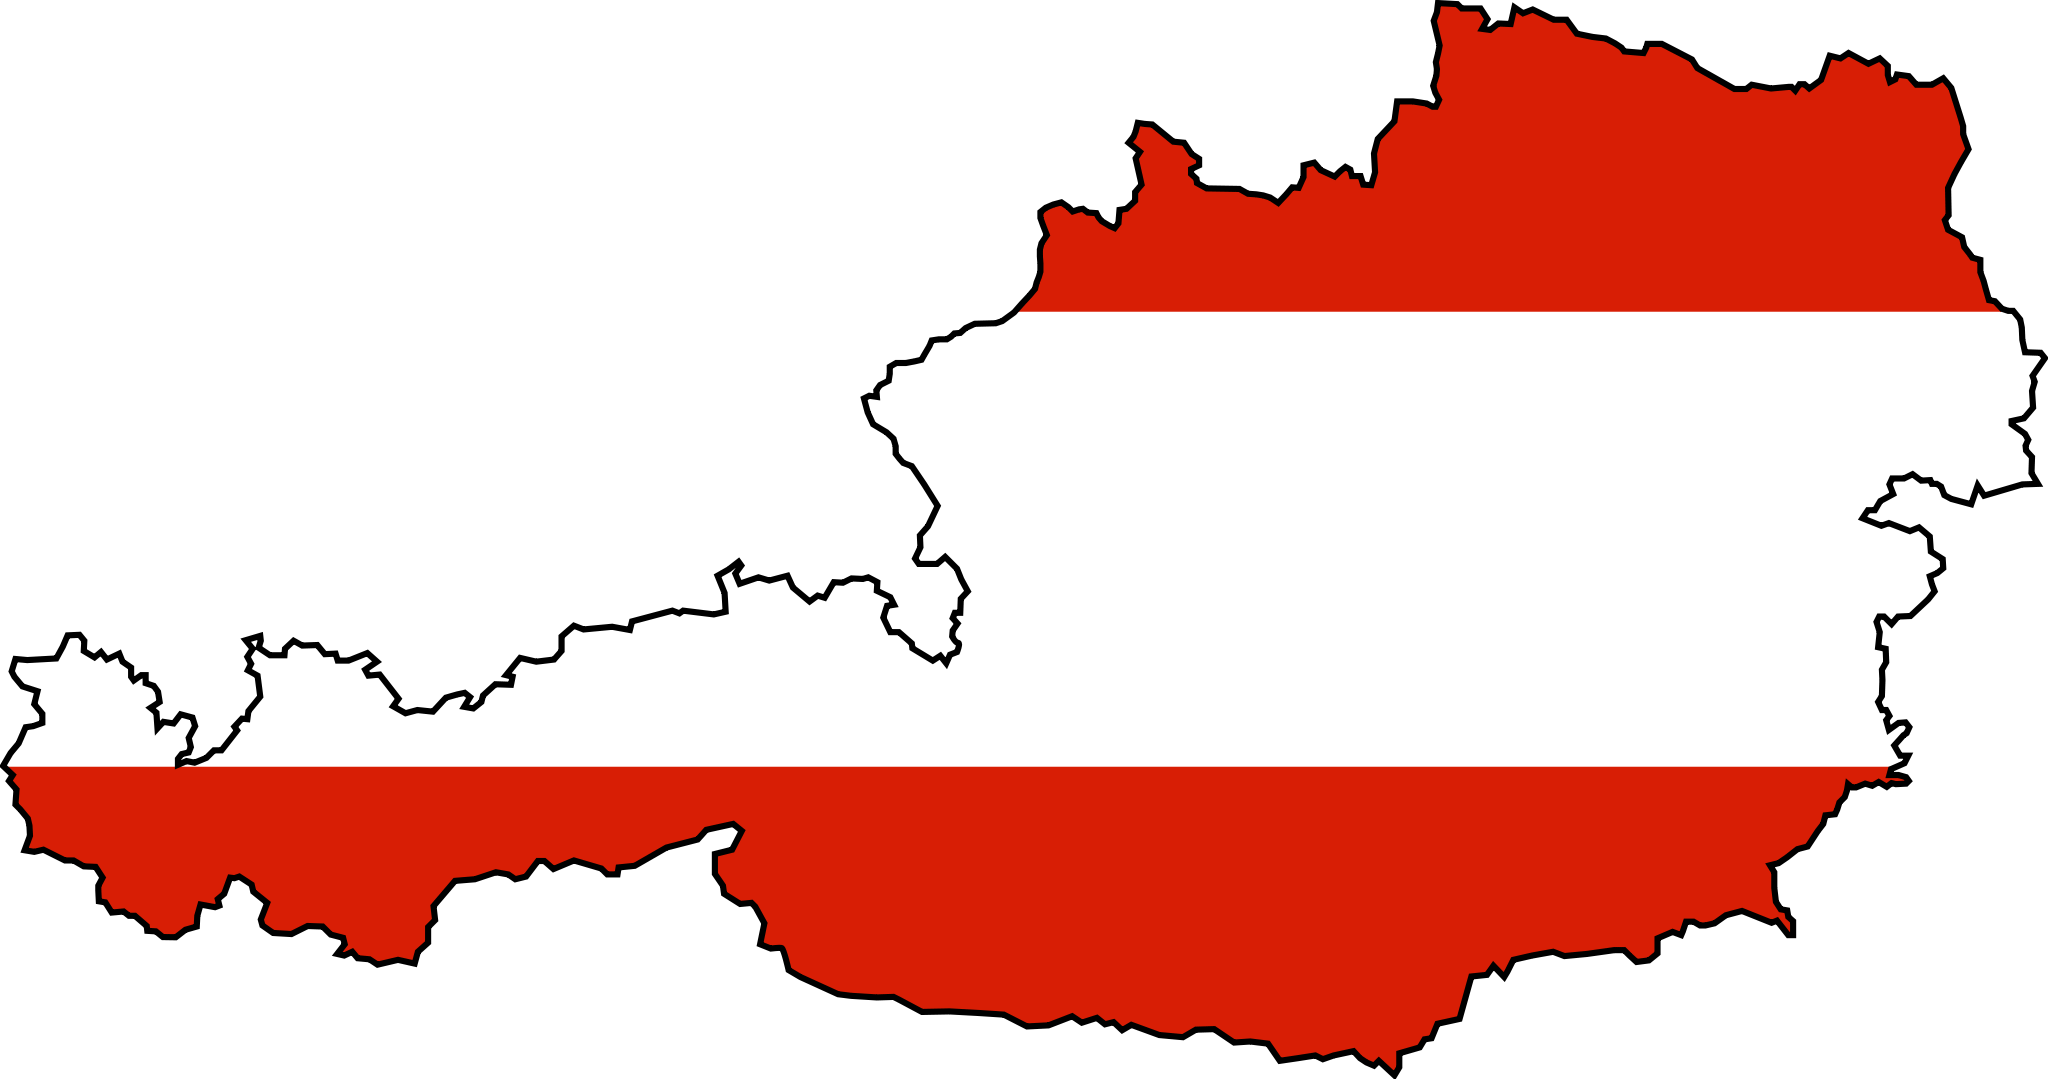 Austria monopoly